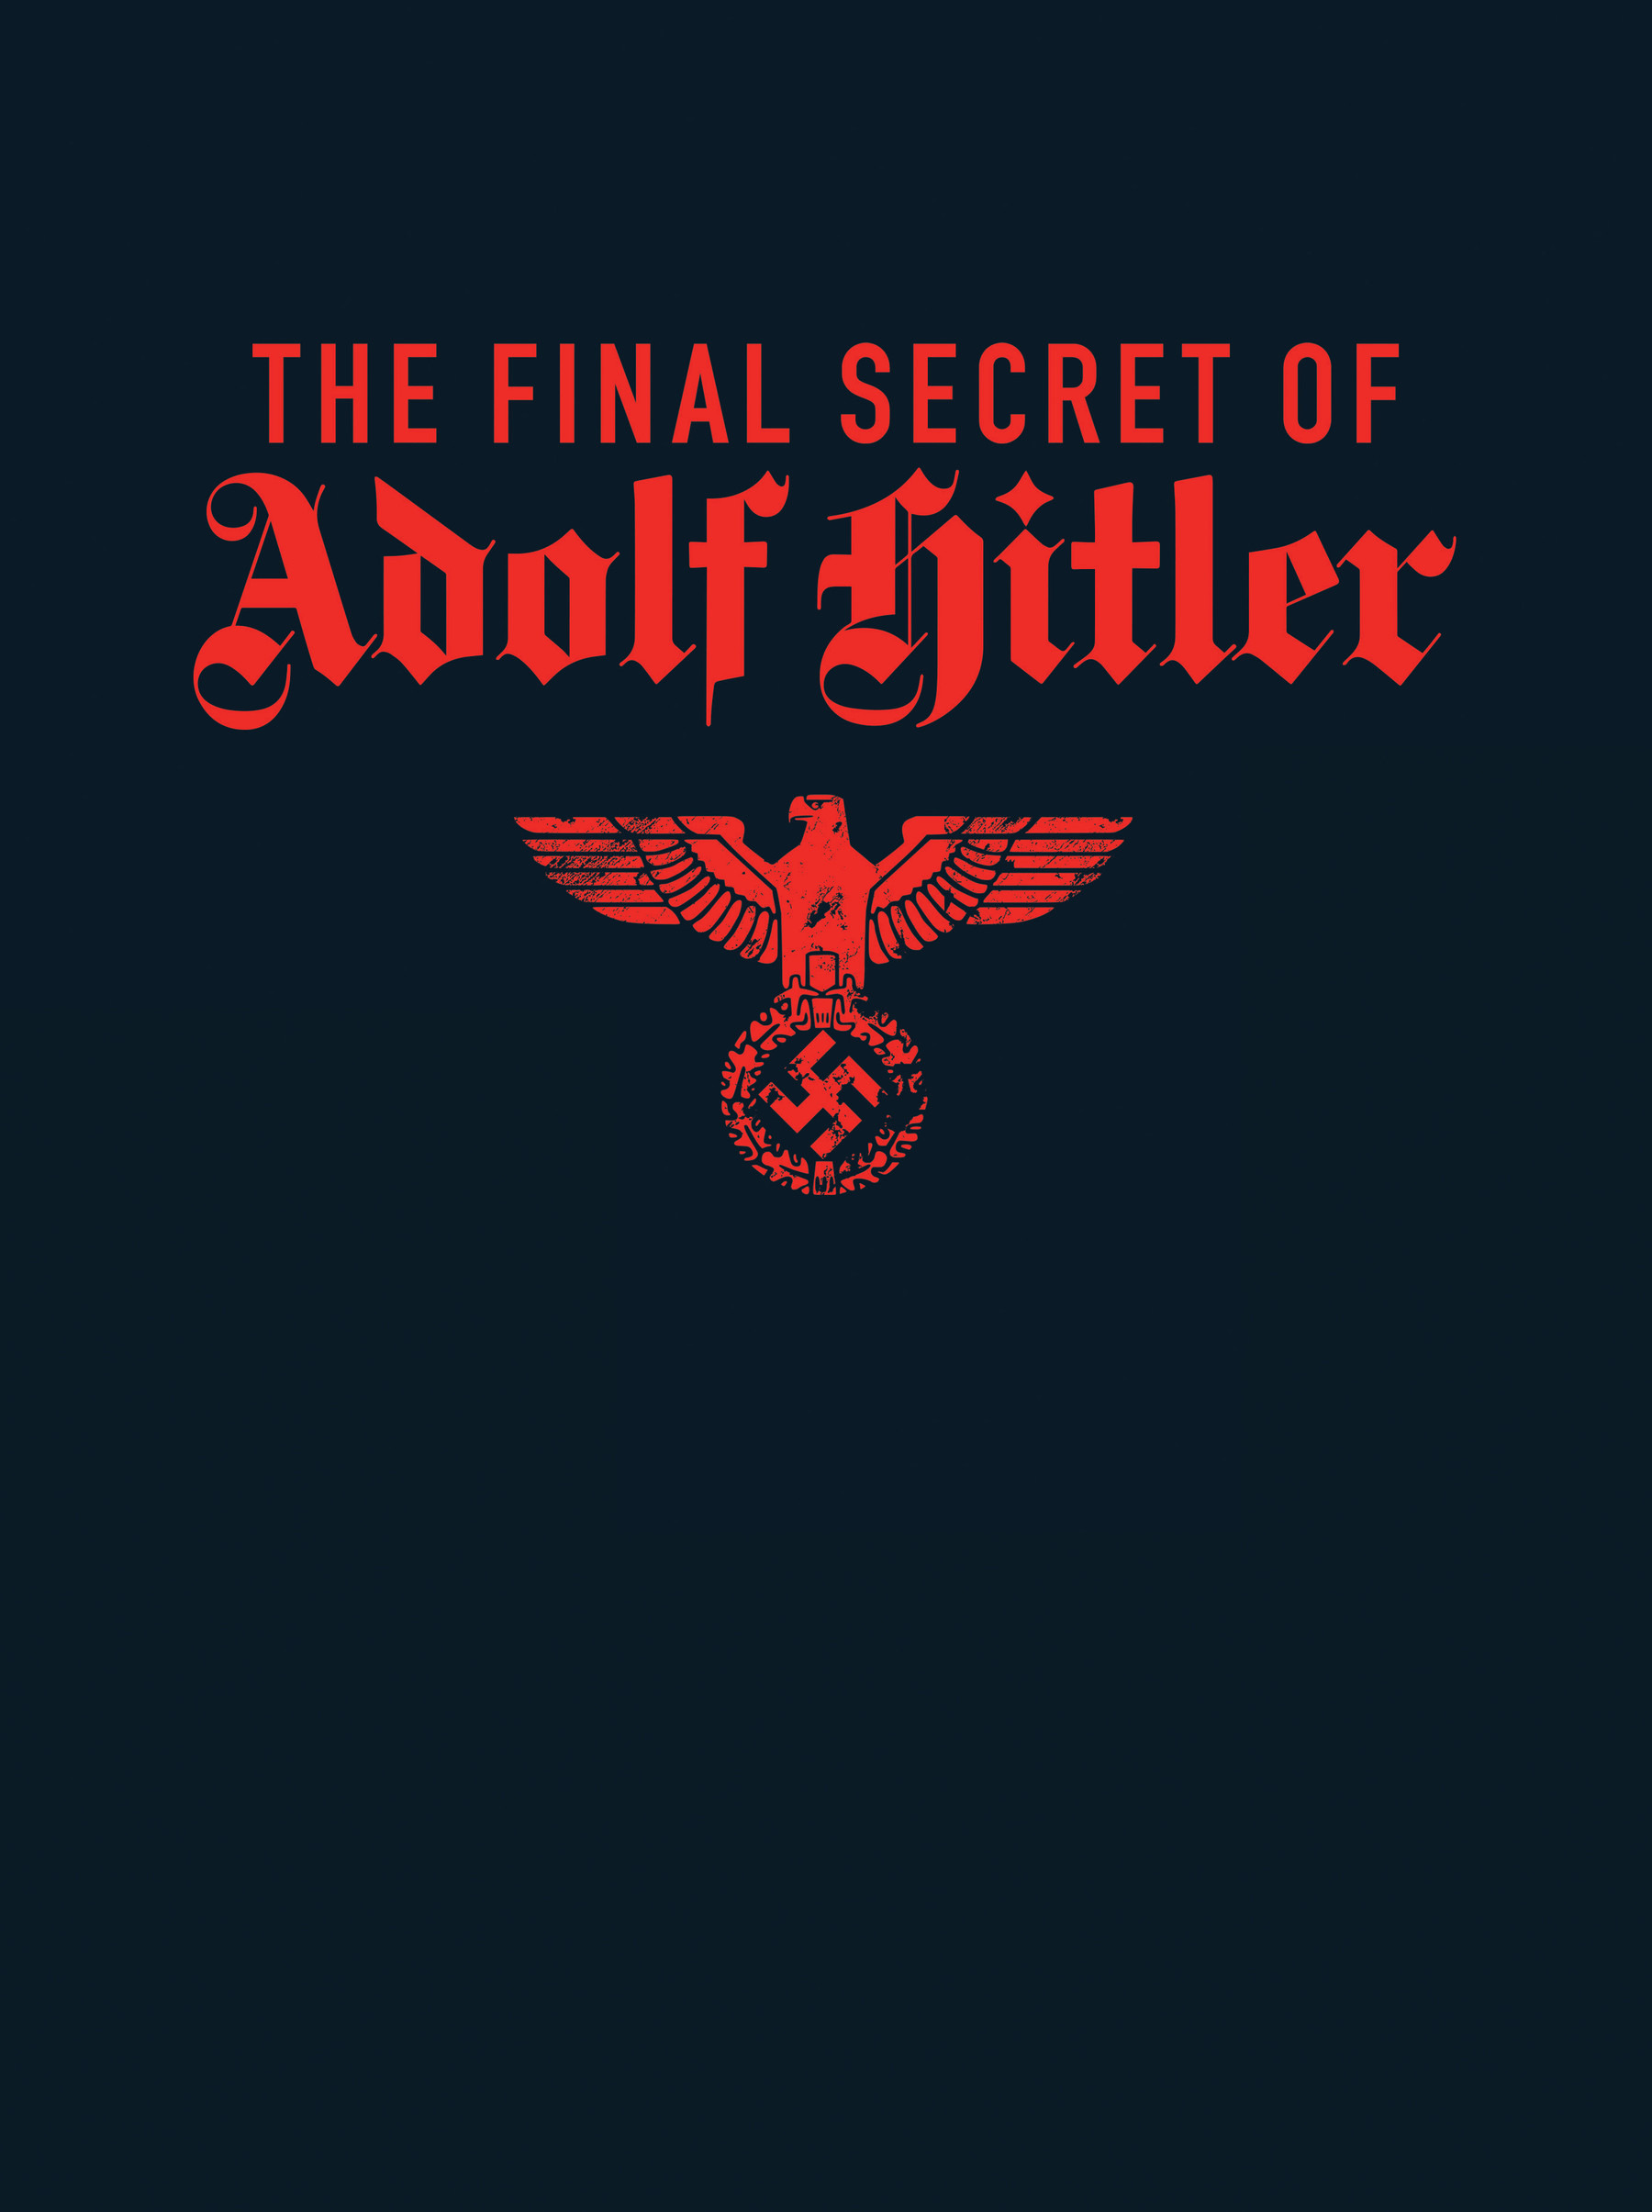 Read online The Final Secret of Adolf Hitler comic -  Issue # TPB - 2